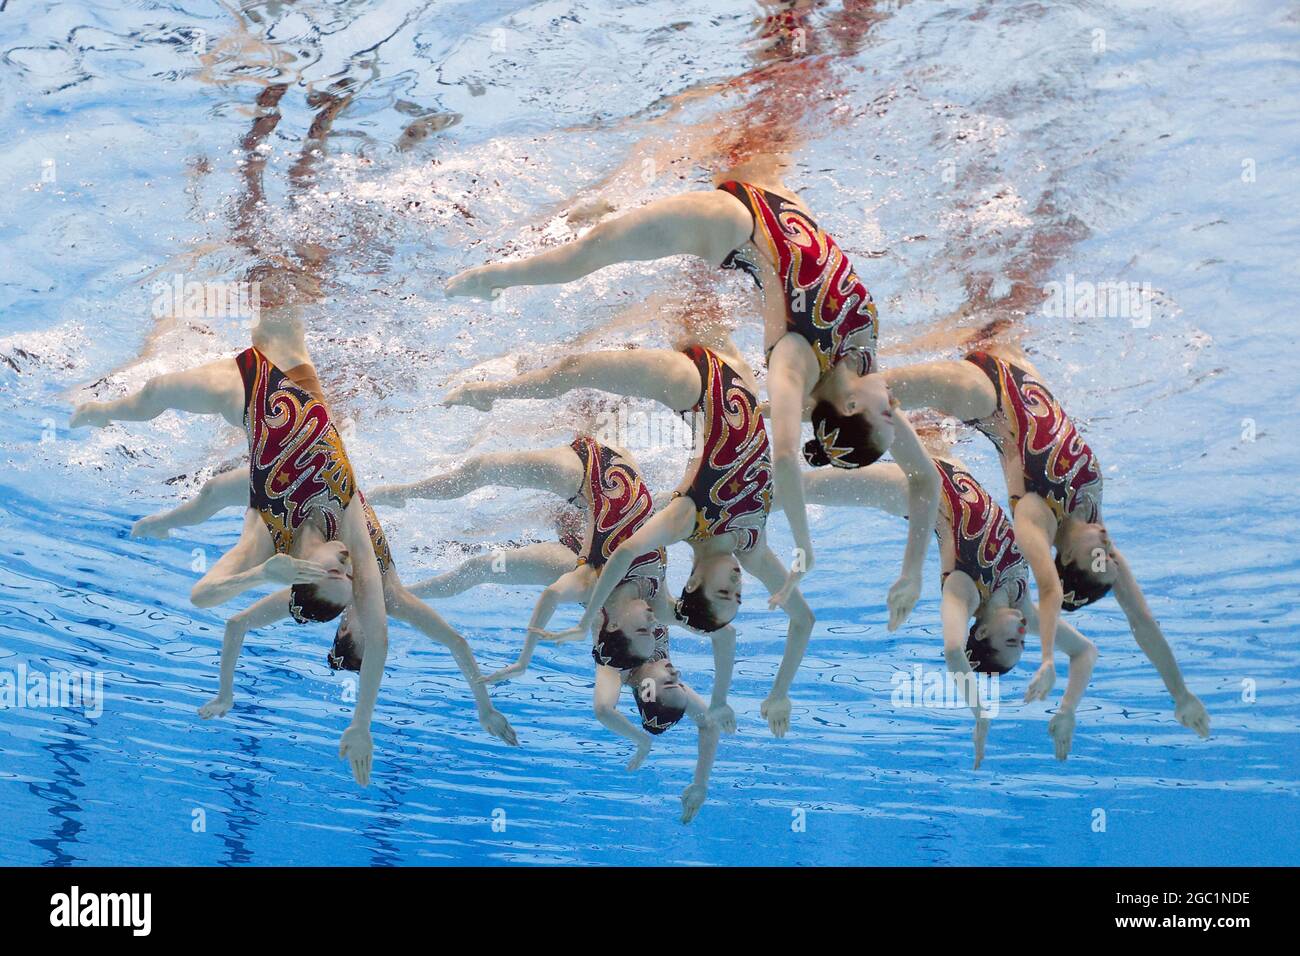 Artistic swimming olympics 2021